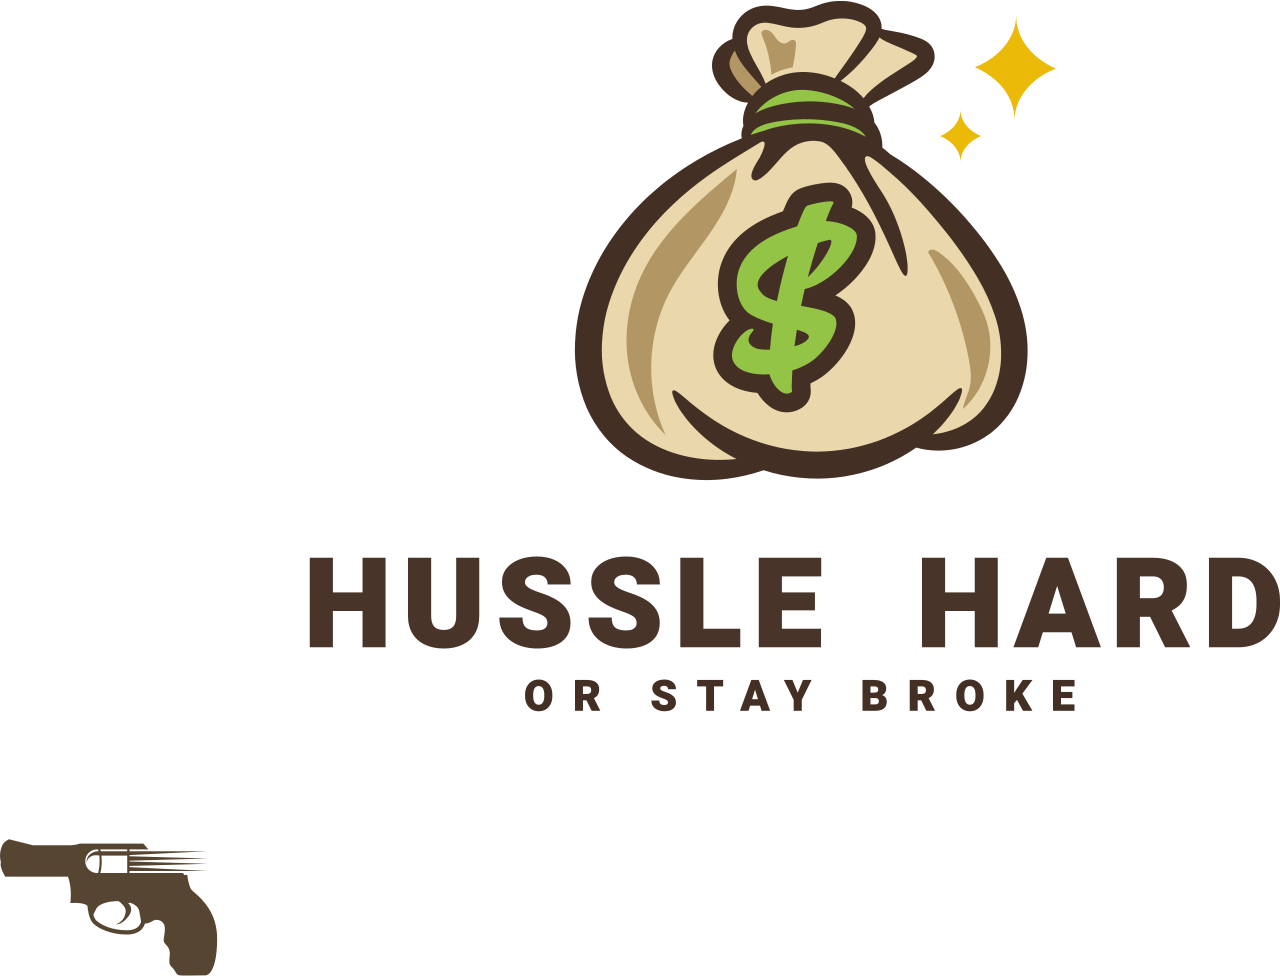 Hussle  hard 's web page